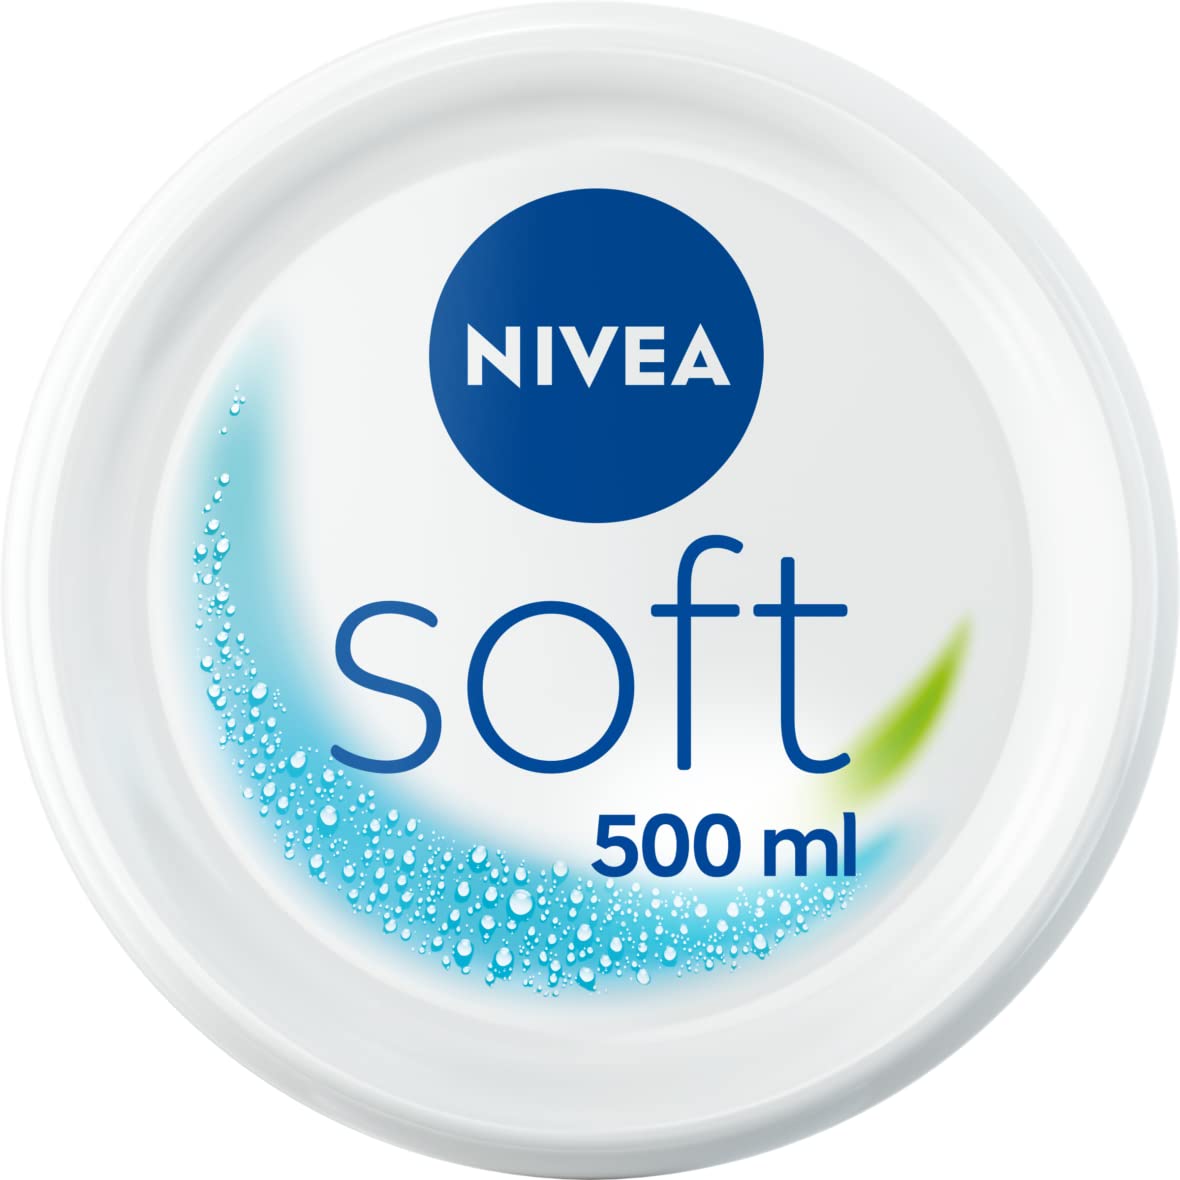 NIVEA Soft Moisturising Cream (500ml), A Moisturising Cream for Face, Body and Hands with Vitamin E and Jojoba Oil, Hand Cream Moisturises Deeply, All - Purpose Day Cream - Ammpoure Wellbeing